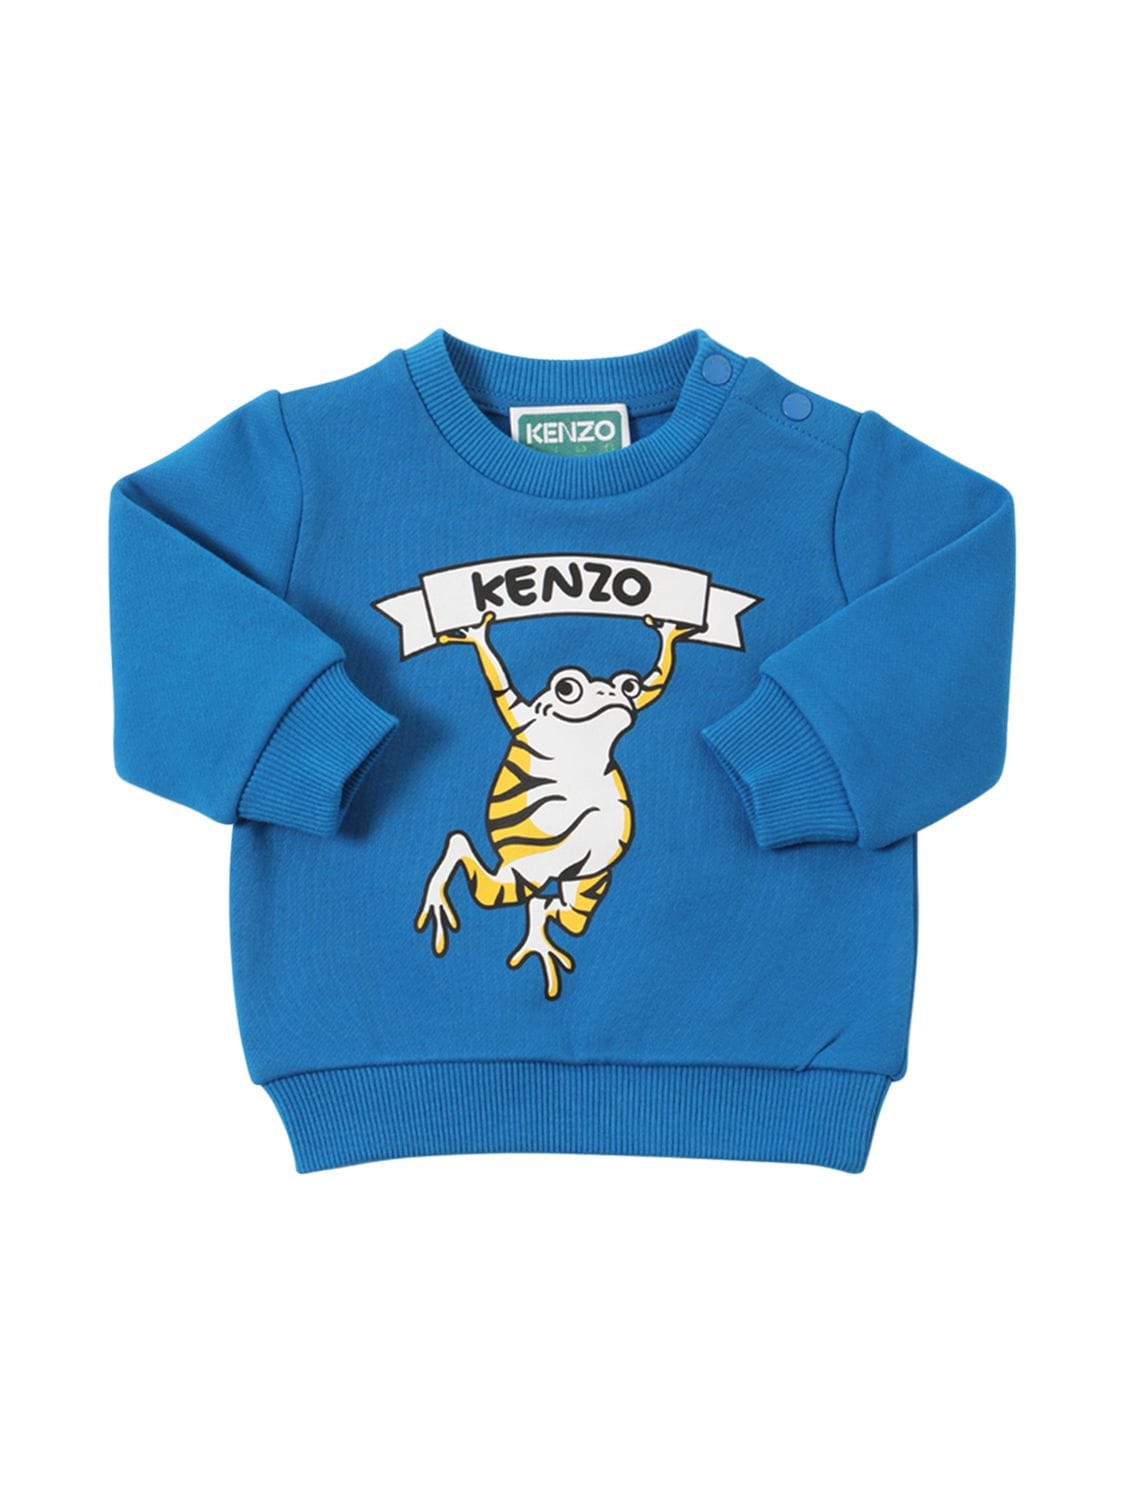 Kenzo Kids' Printed Cotton Sweatshirt W/ Logo In Blue